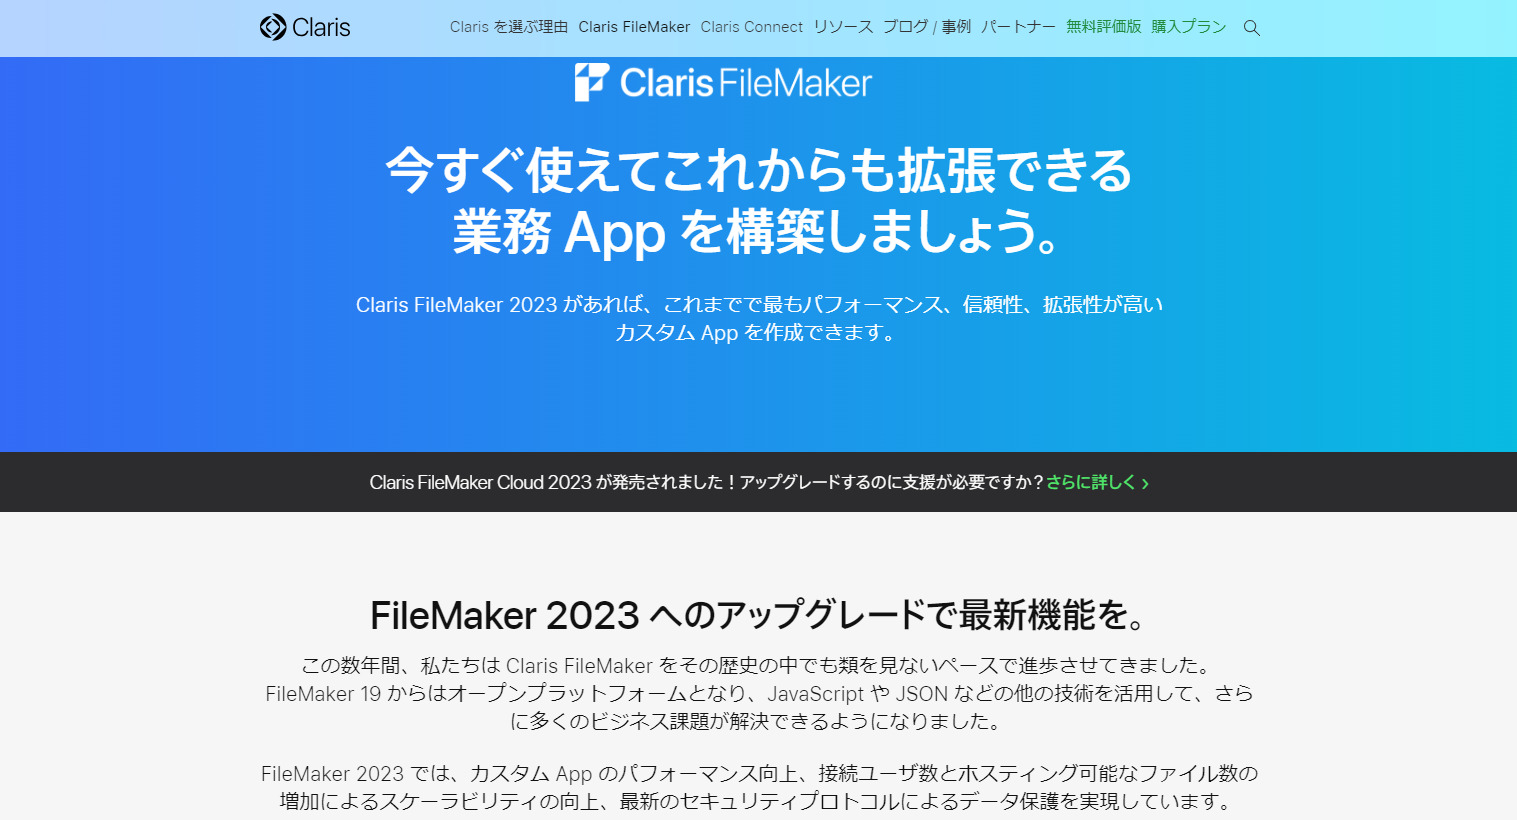 FileMakerのトップページ